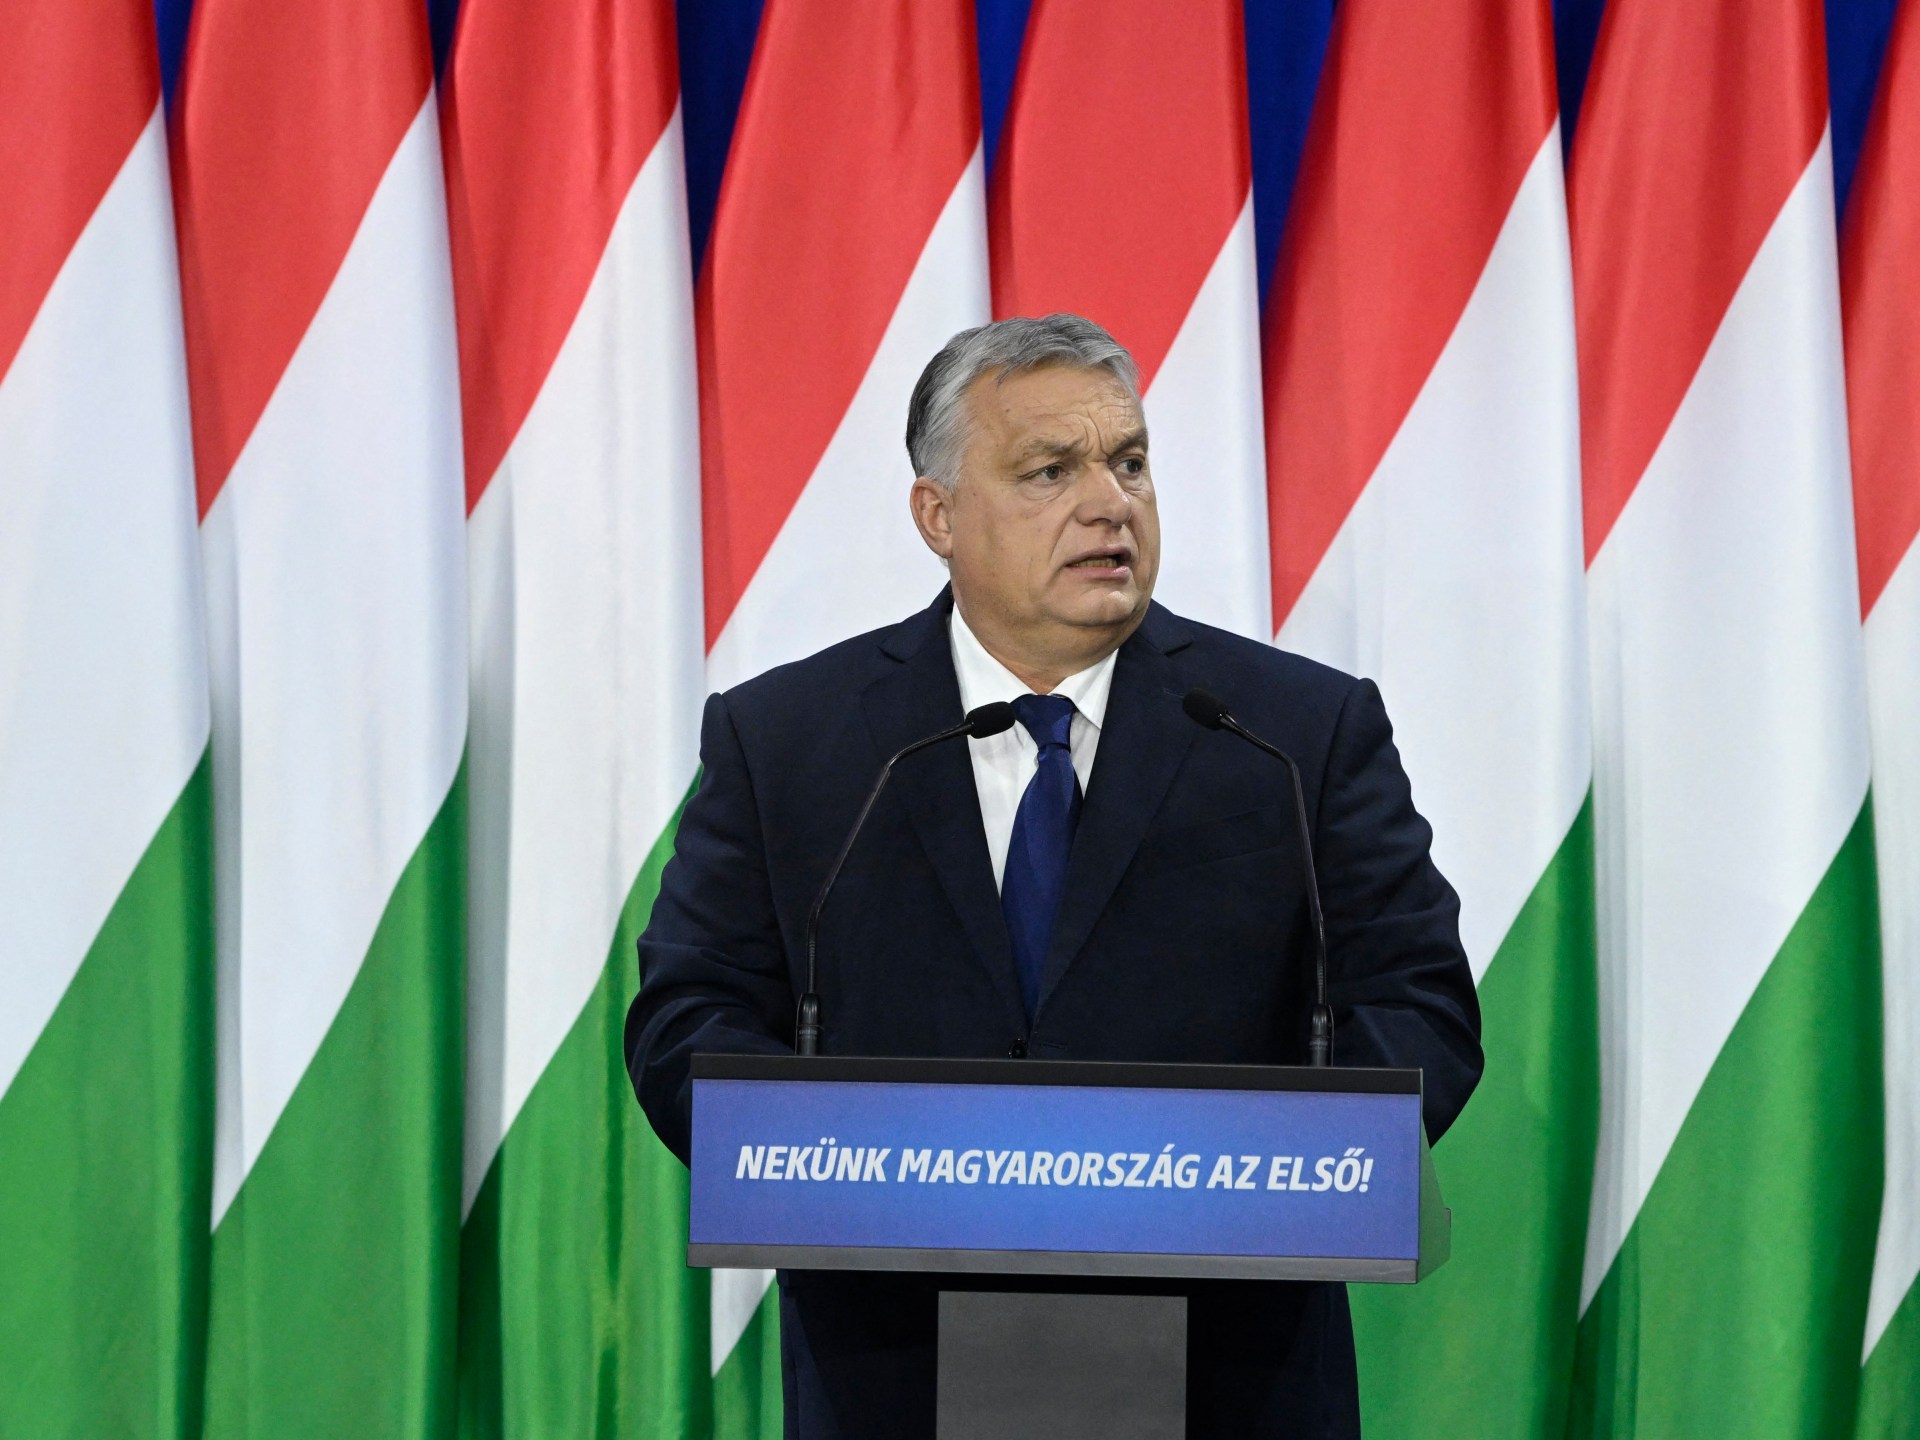 Patriots for Europe: Hungarys Orban announces new EU Parliament alliance | European Union News [Video]